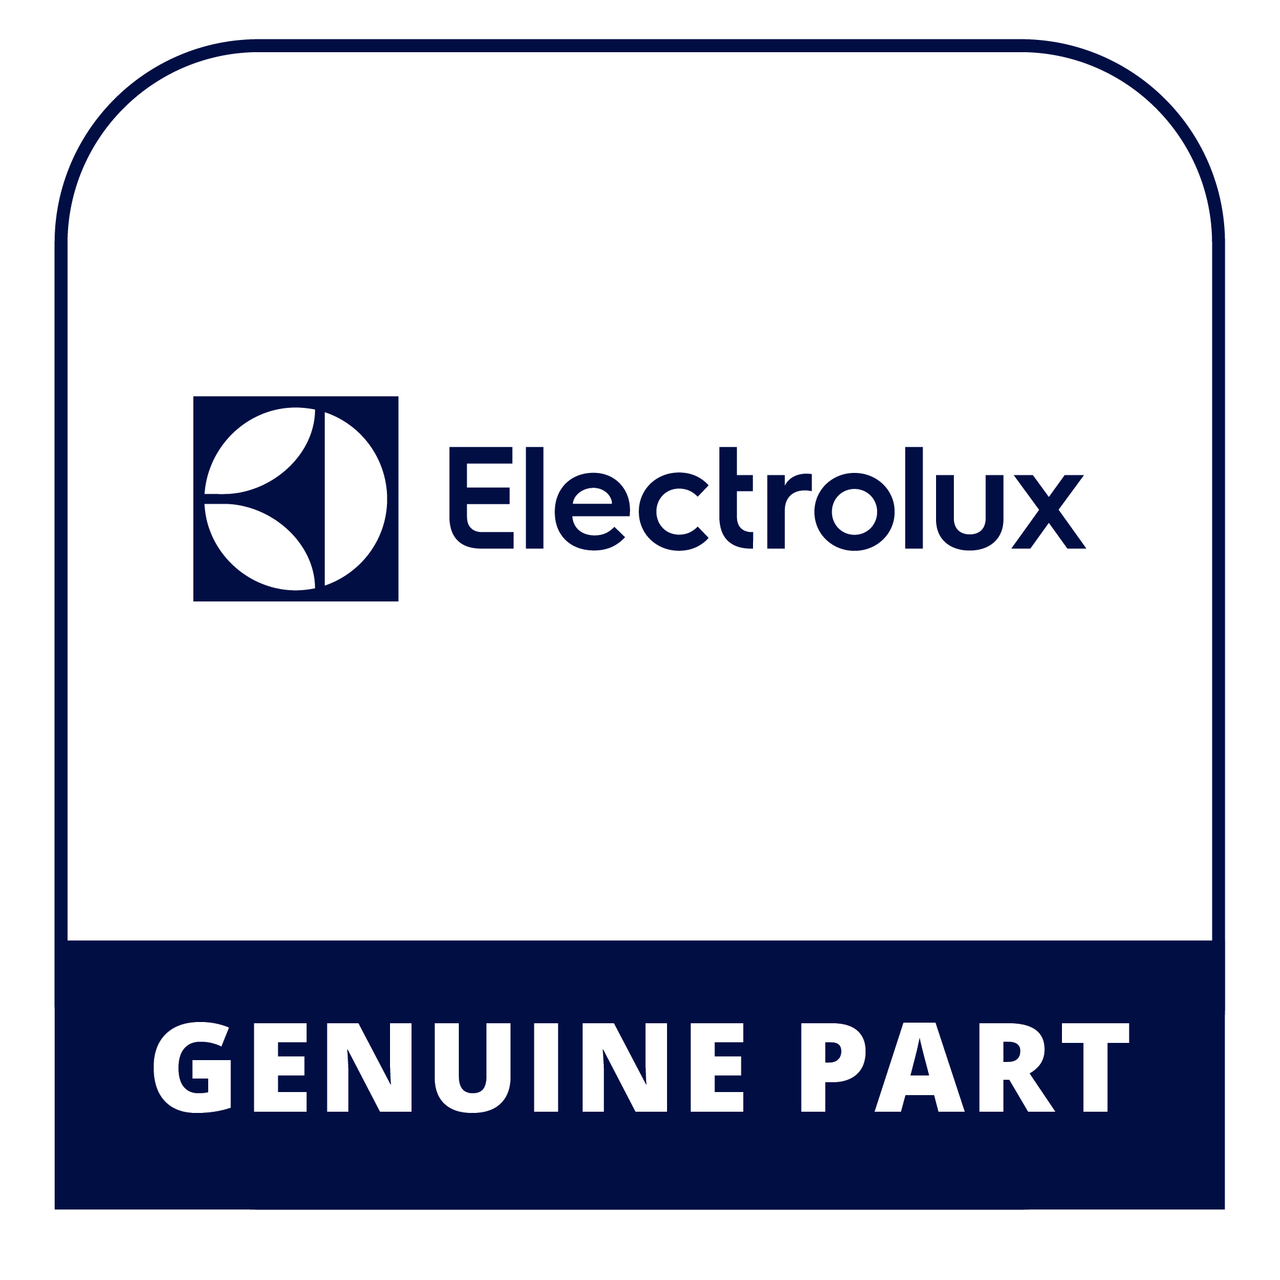 Frigidaire - Electrolux 316423707 - Use 5304529999 - Genuine Electrolux Part